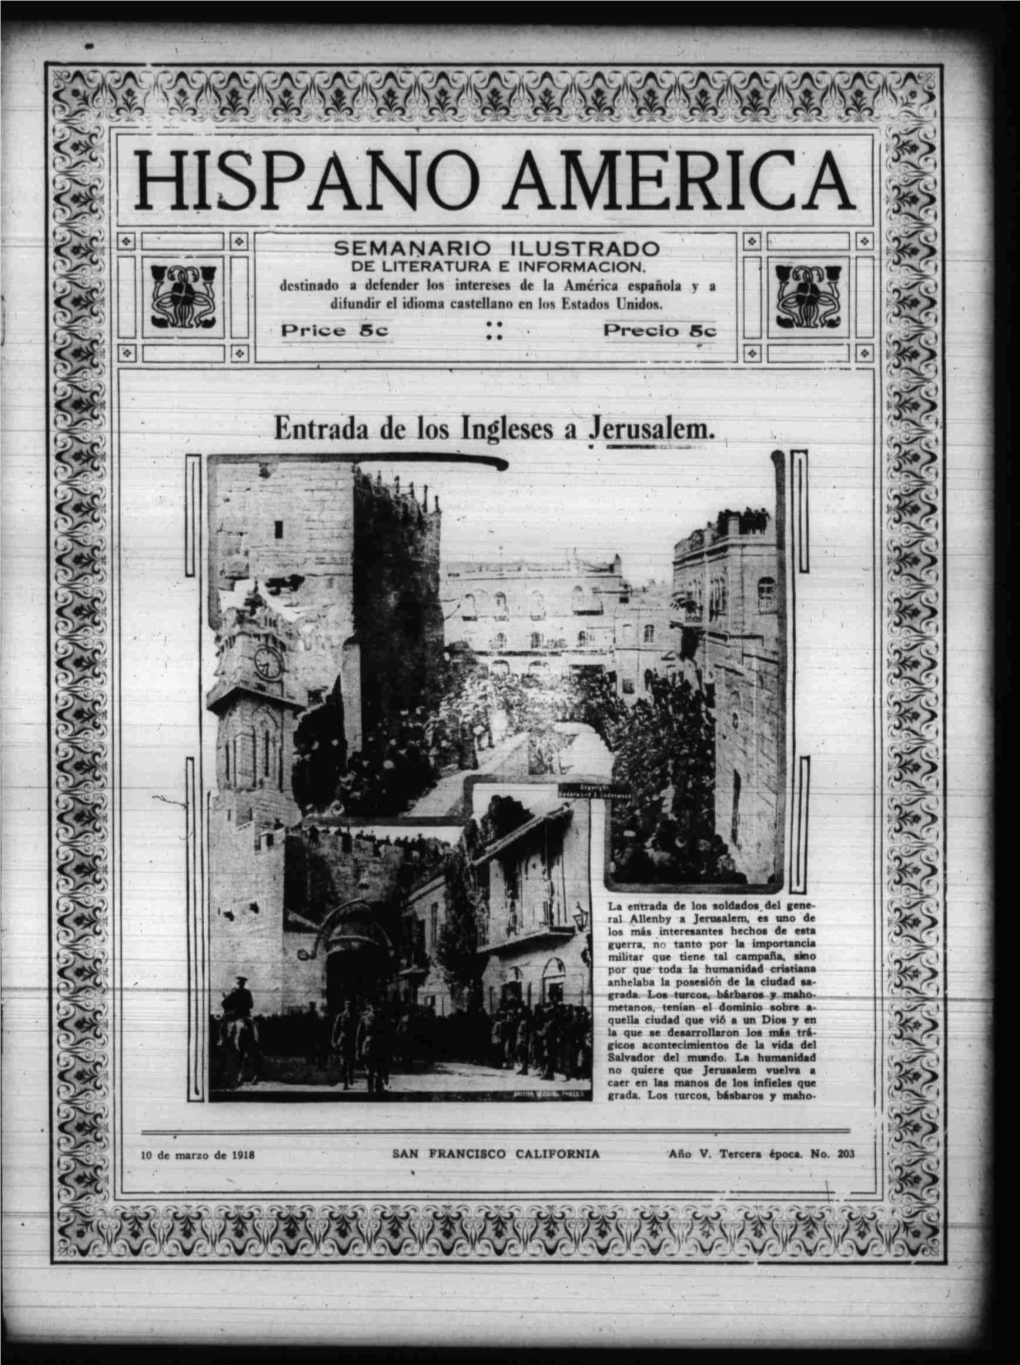 Hispano America